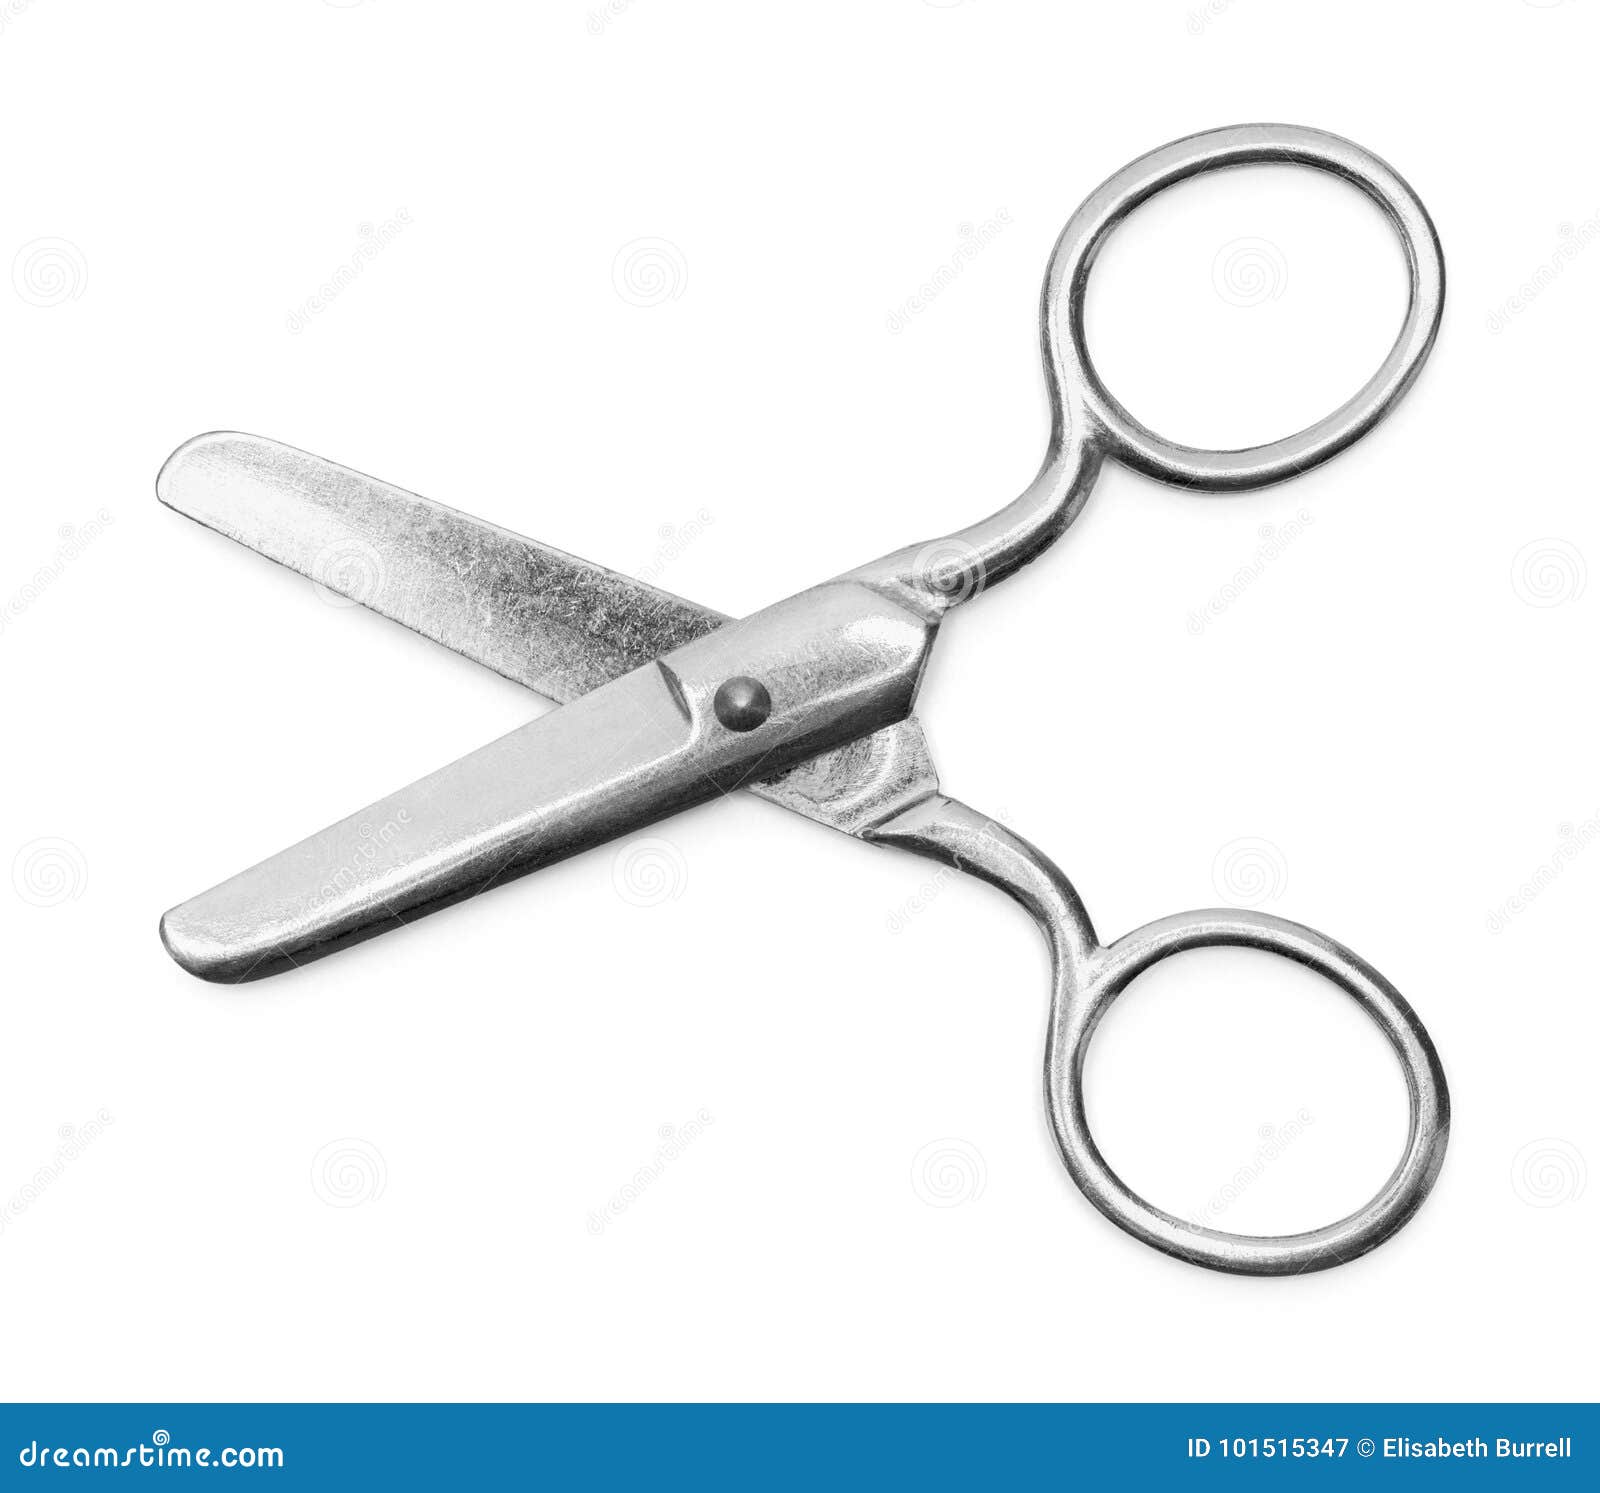 https://thumbs.dreamstime.com/z/open-kids-scissors-pair-open-metal-kids-scissors-isolated-white-background-101515347.jpg